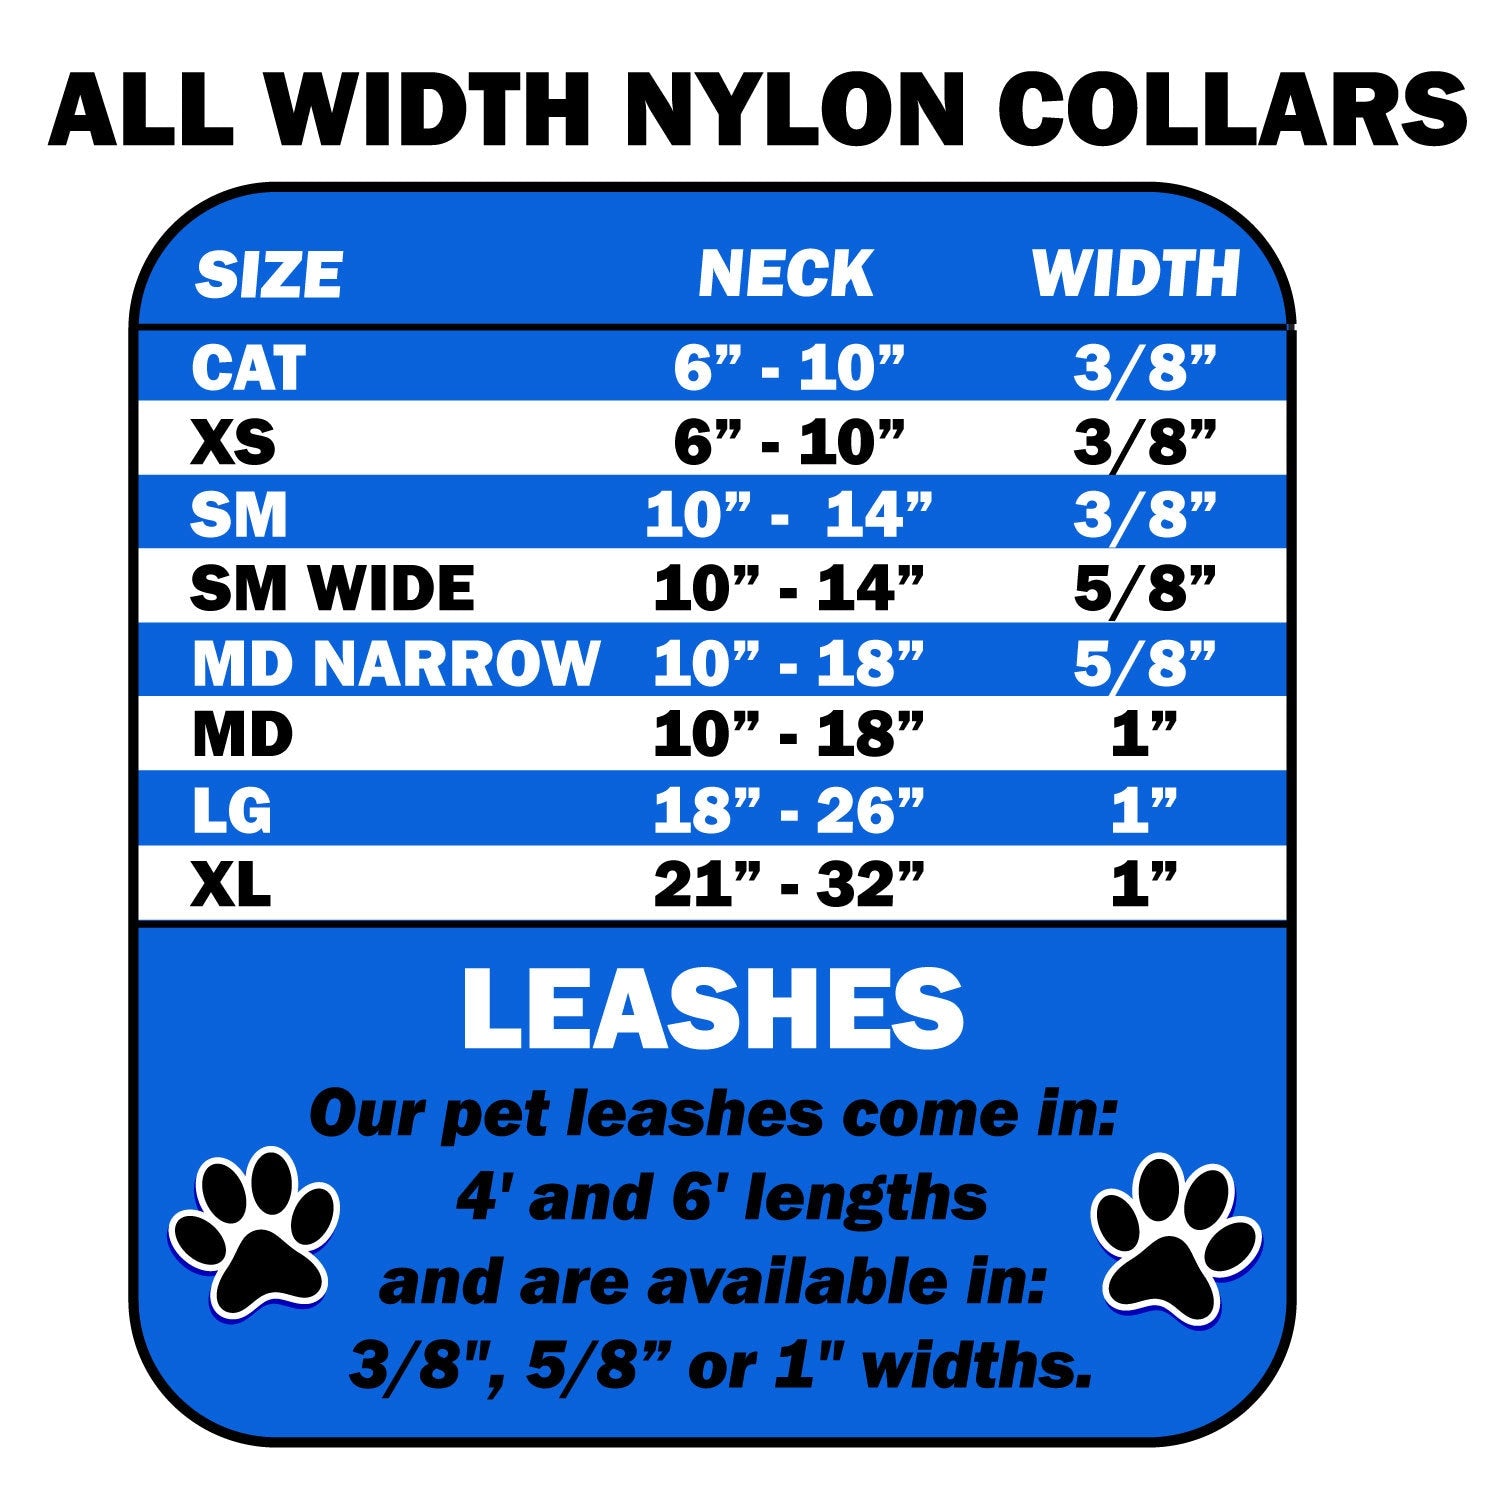 Pet Dog & Cat Nylon Collar or Leash, "Hot Pink Plaid Skulls"